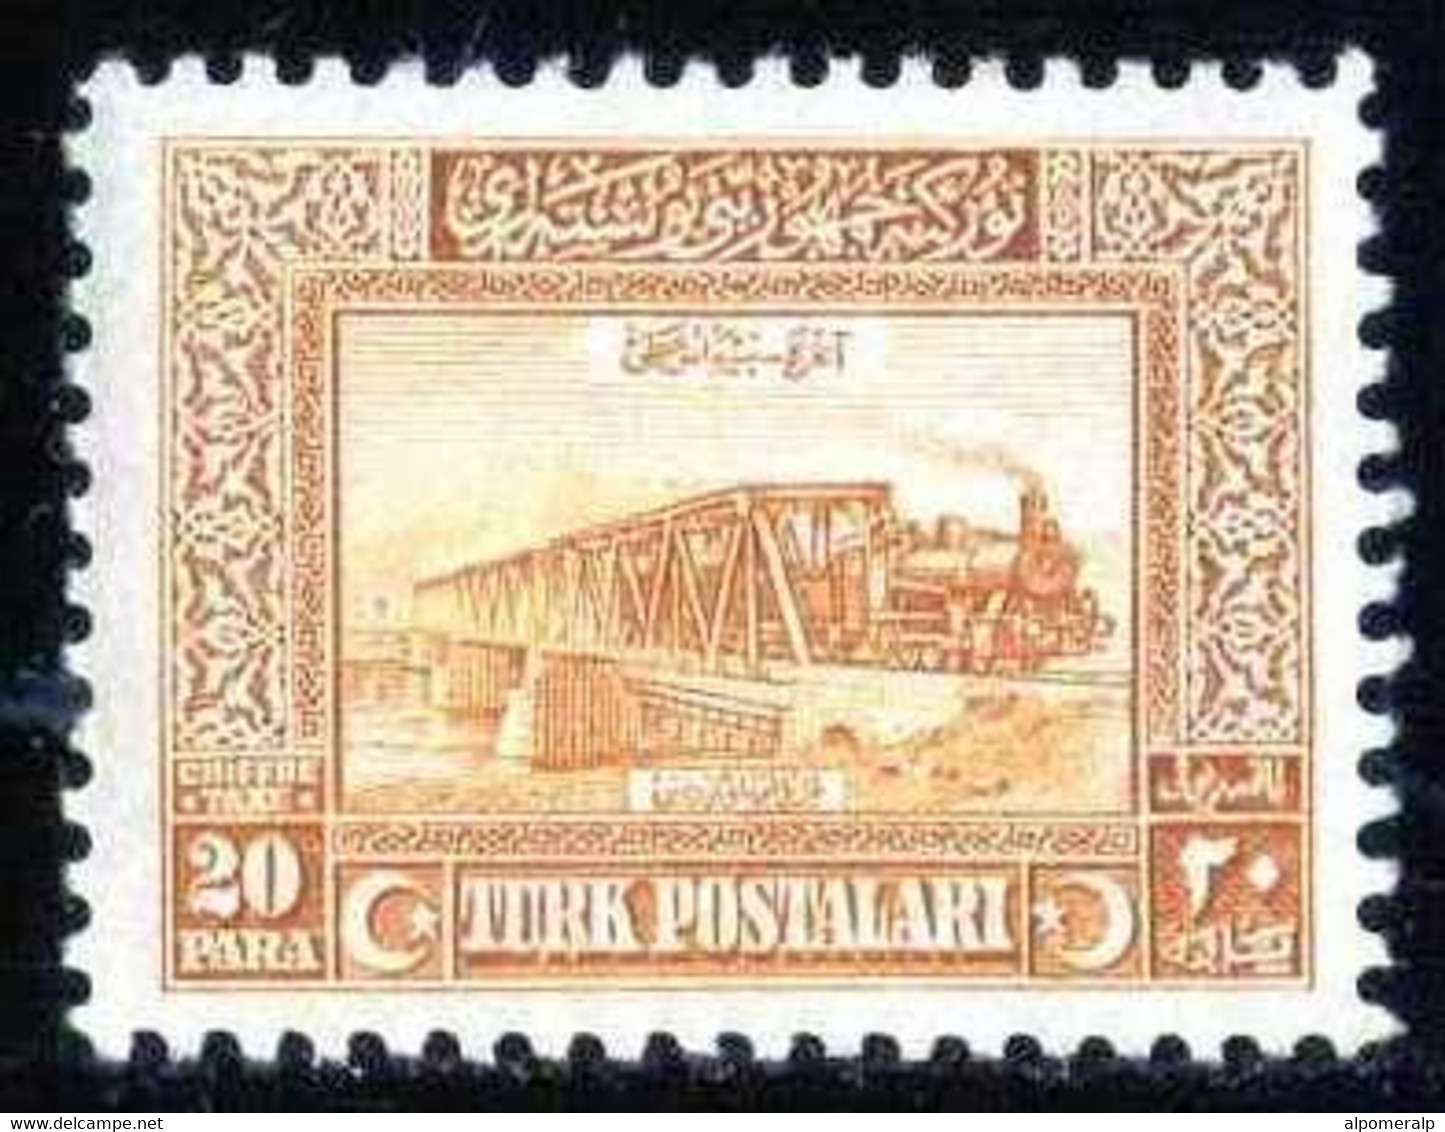 Türkiye 1926 P52 MNH Postage Due, Railroad Bridge Over Kizil Irmak | Locomotive, Railway, Steam Traction - Postage Due